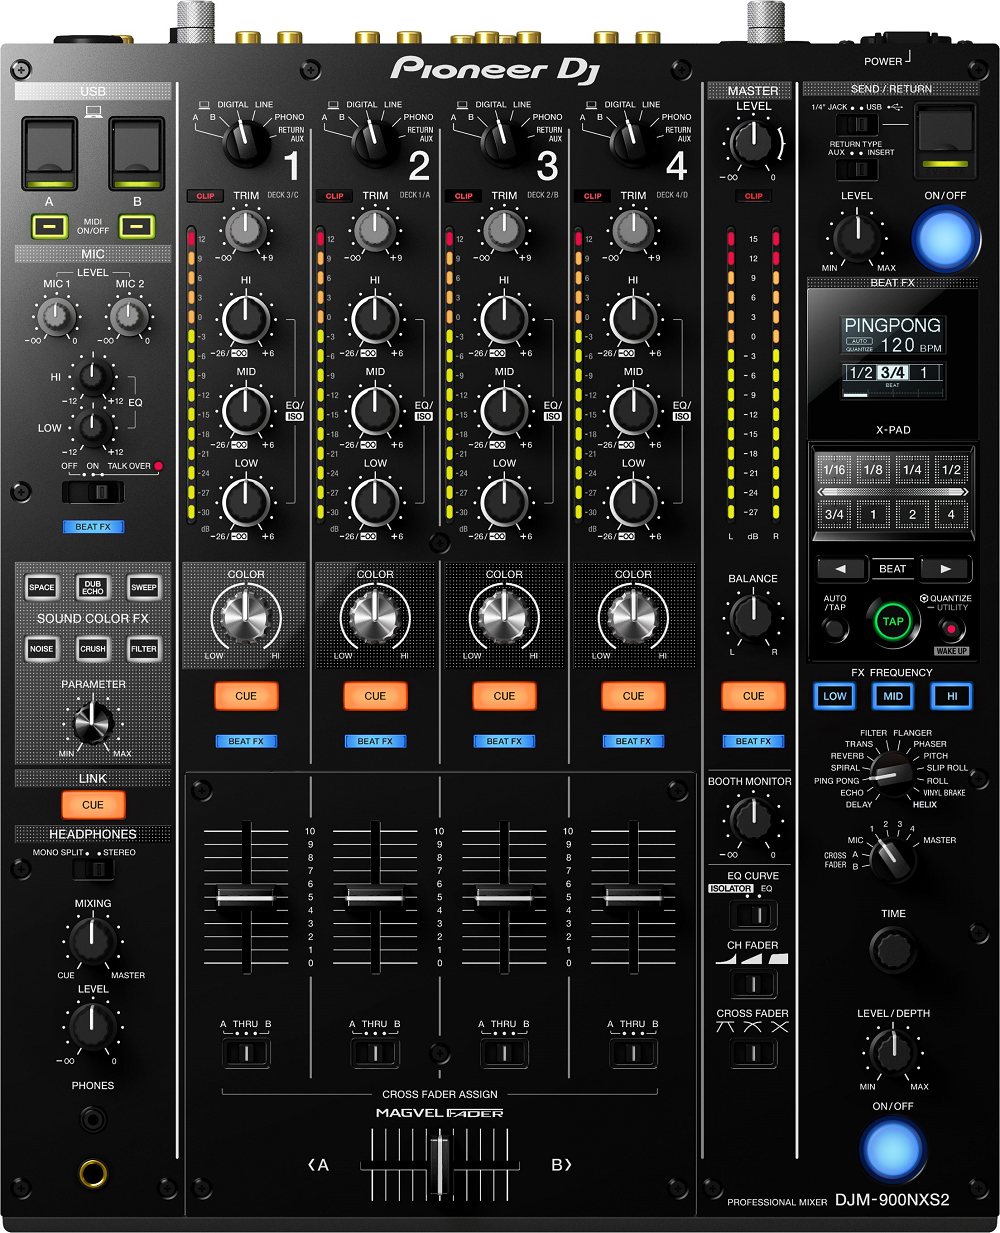 DJM-900NXS2 Table de mixage dj Pioneer dj